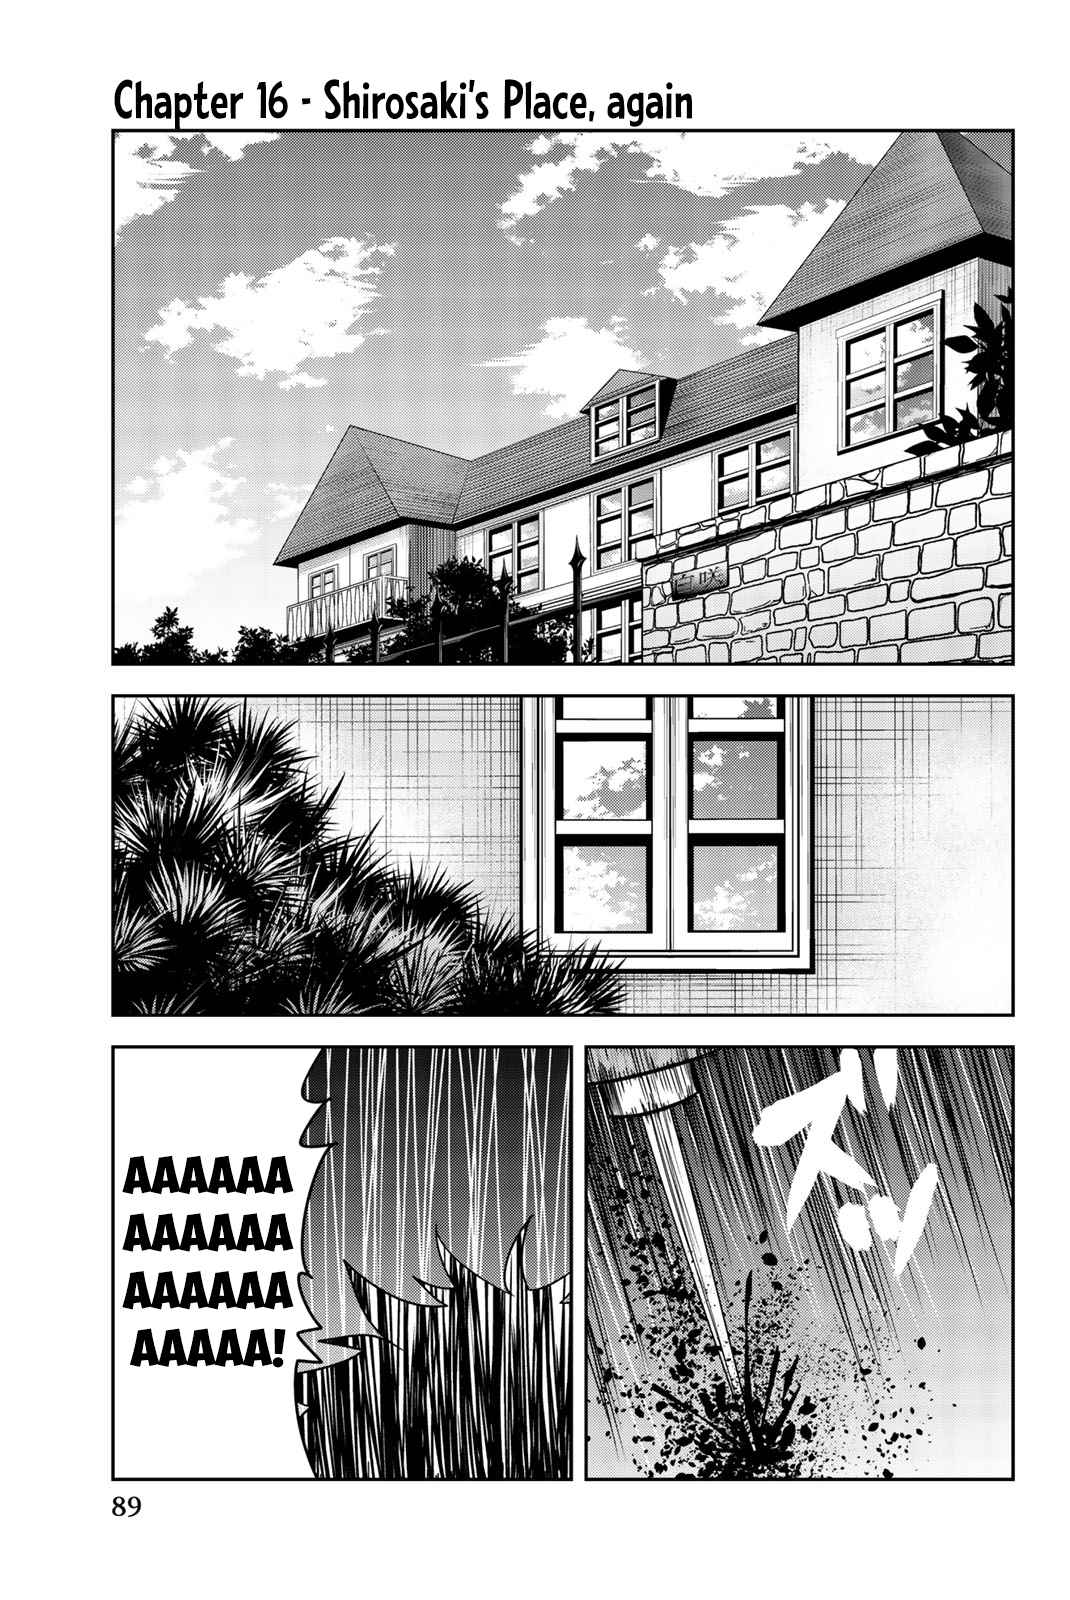 Ijimeru Yabai Yatsu Vol. 2 Ch. 16 Shirosaki's Place, again